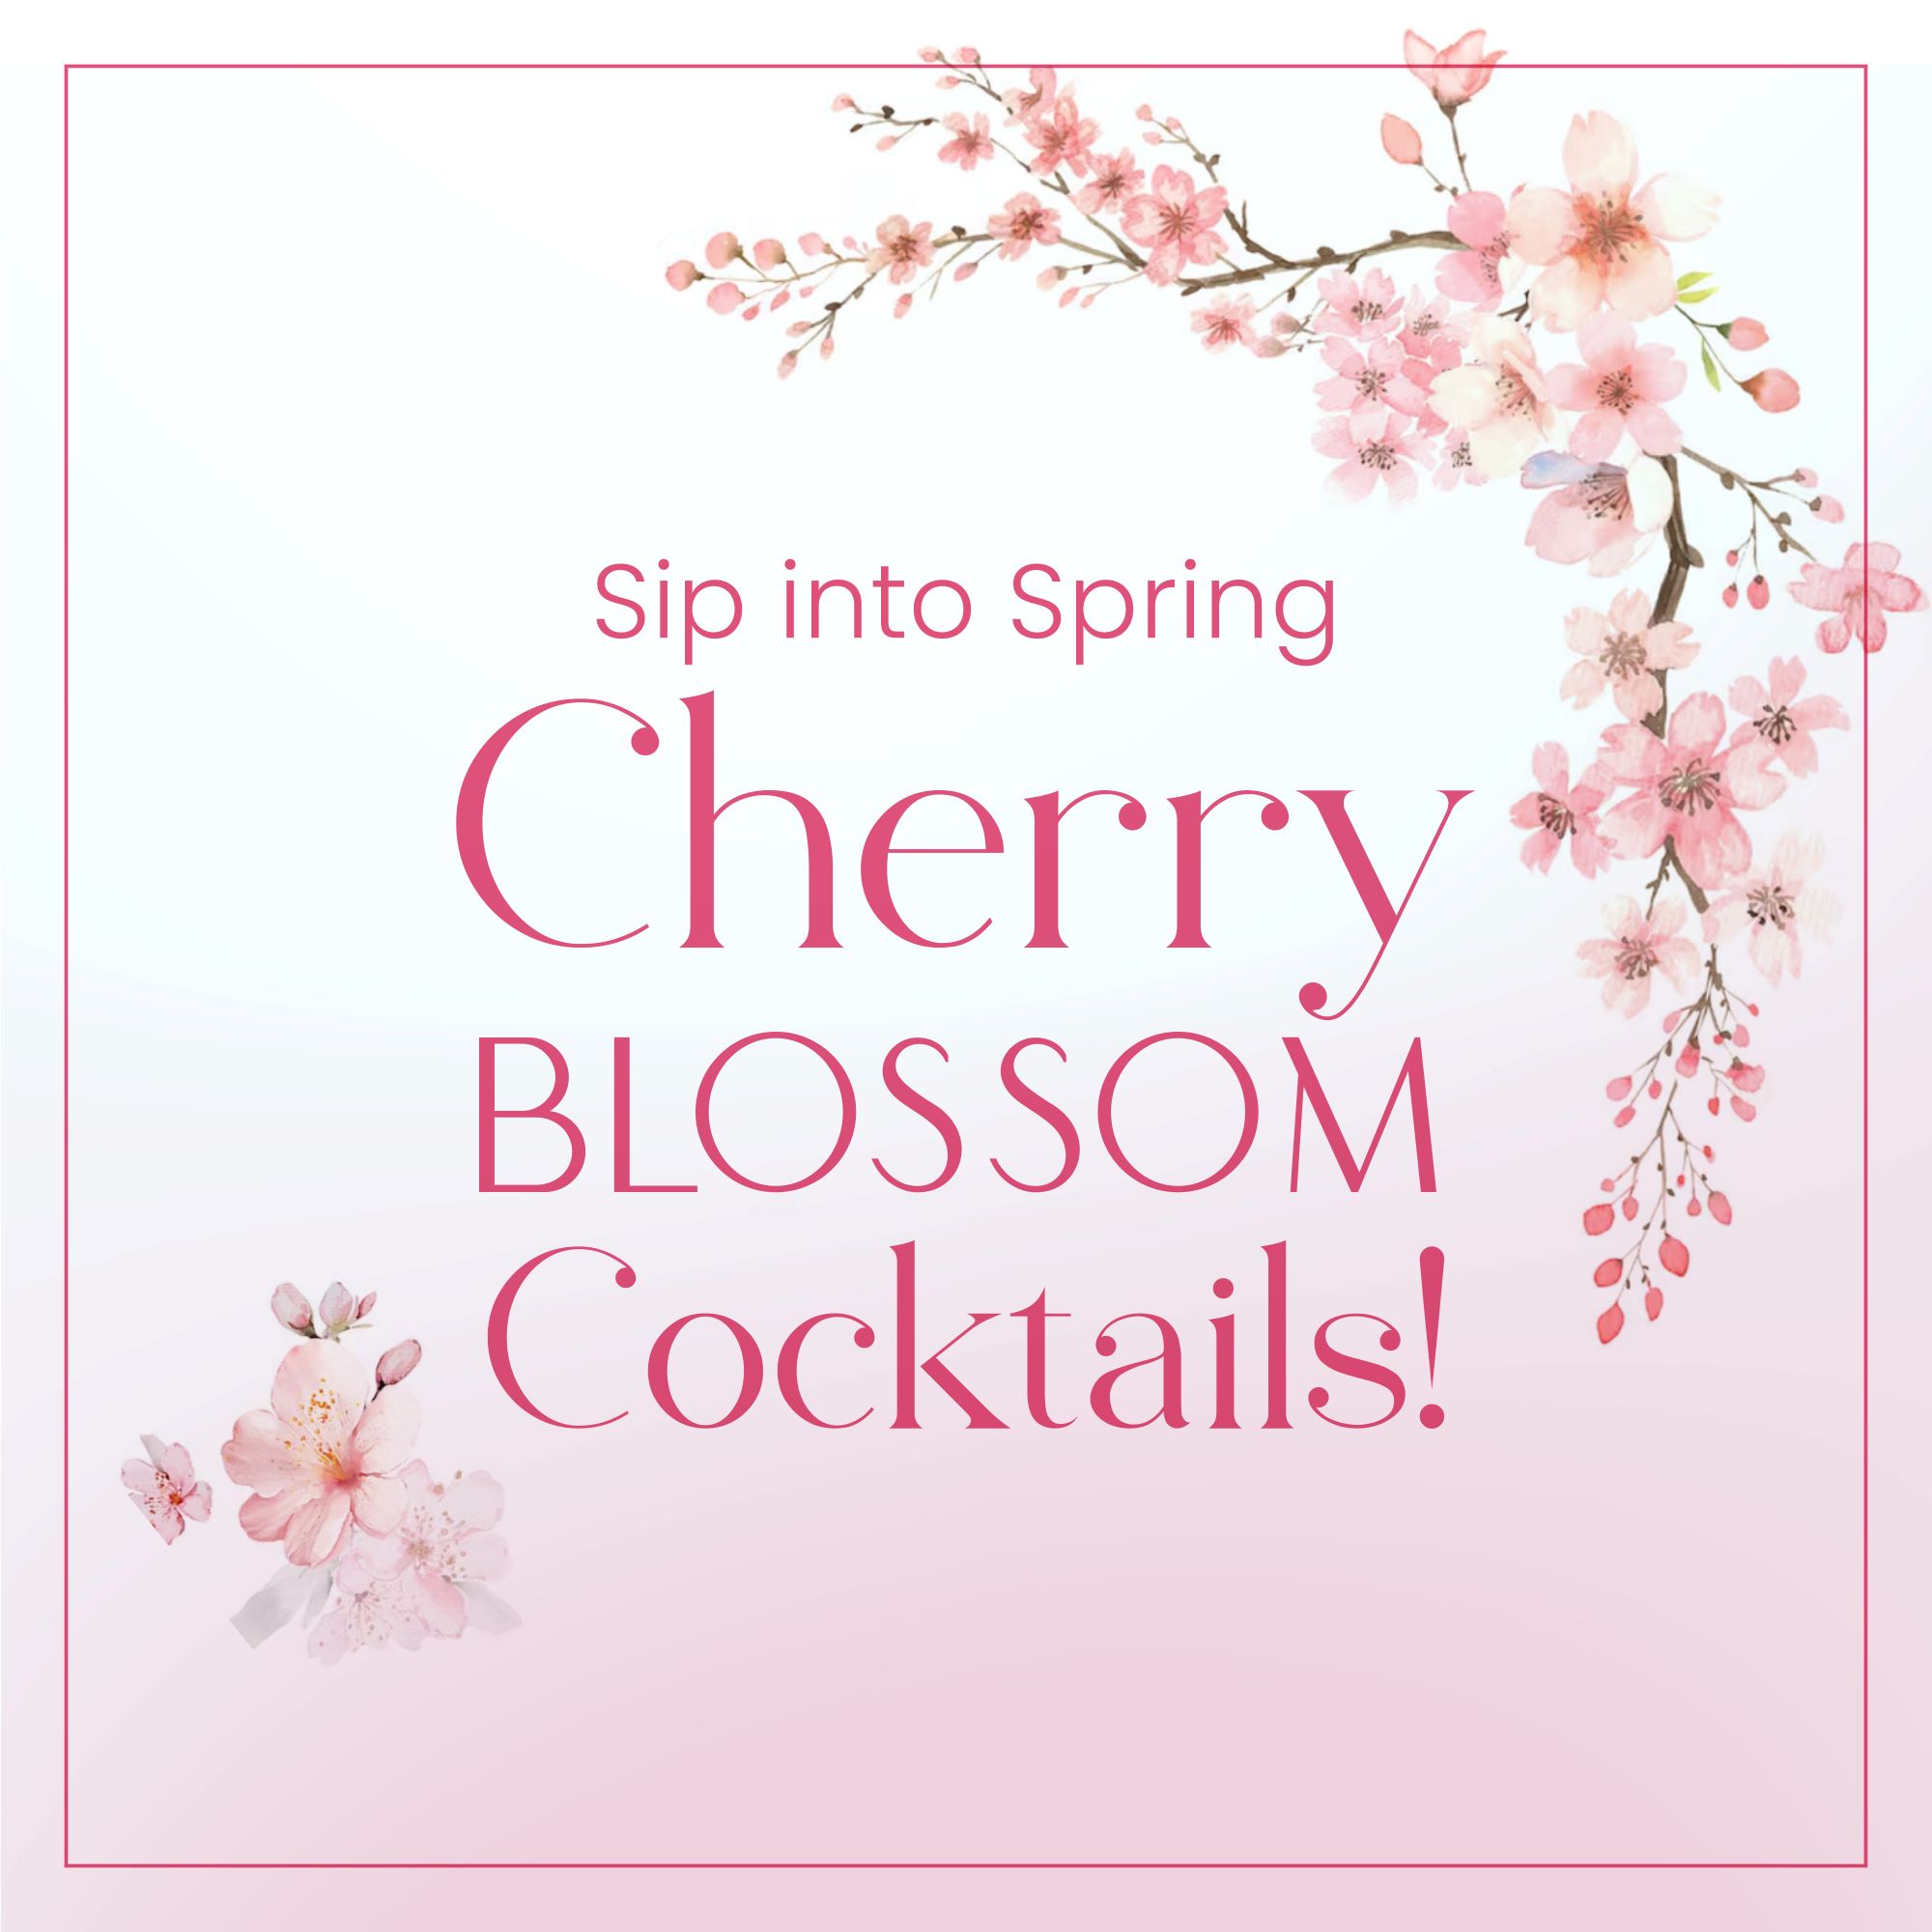 Cherry Blossom - Instagram 3.15